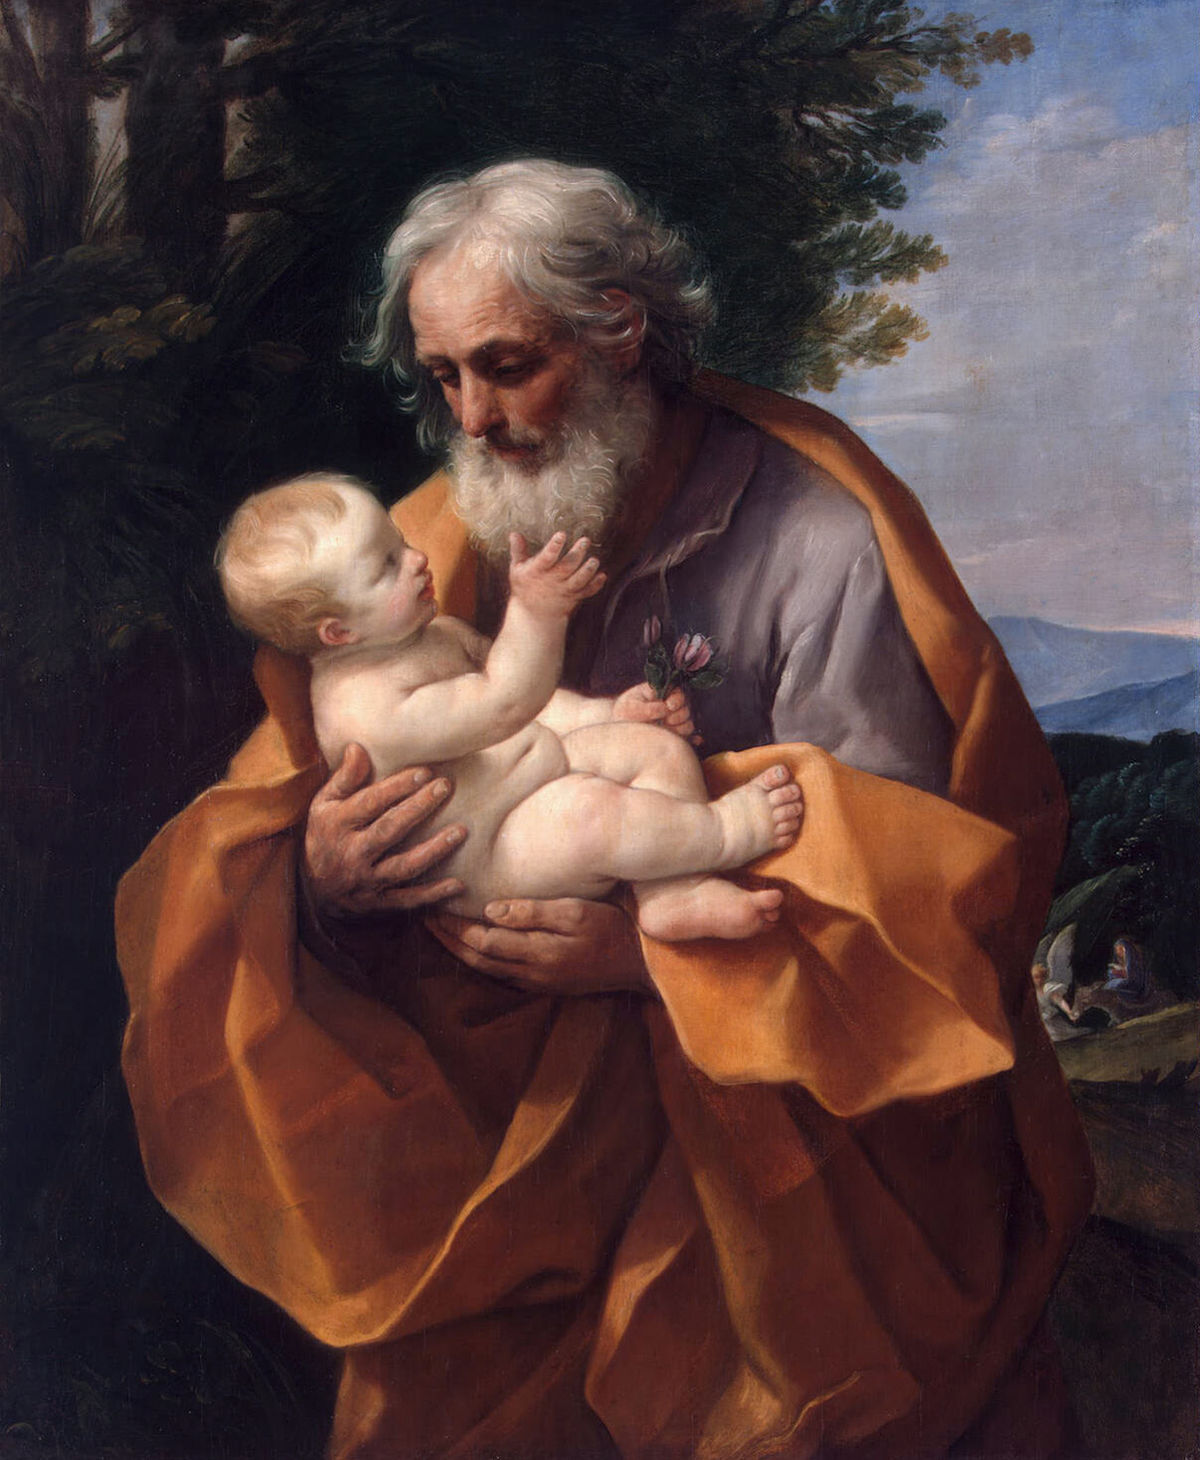 Saint_Joseph_with_the_Infant_Jesus_by_Guido_Reni,_c_1635 (1)